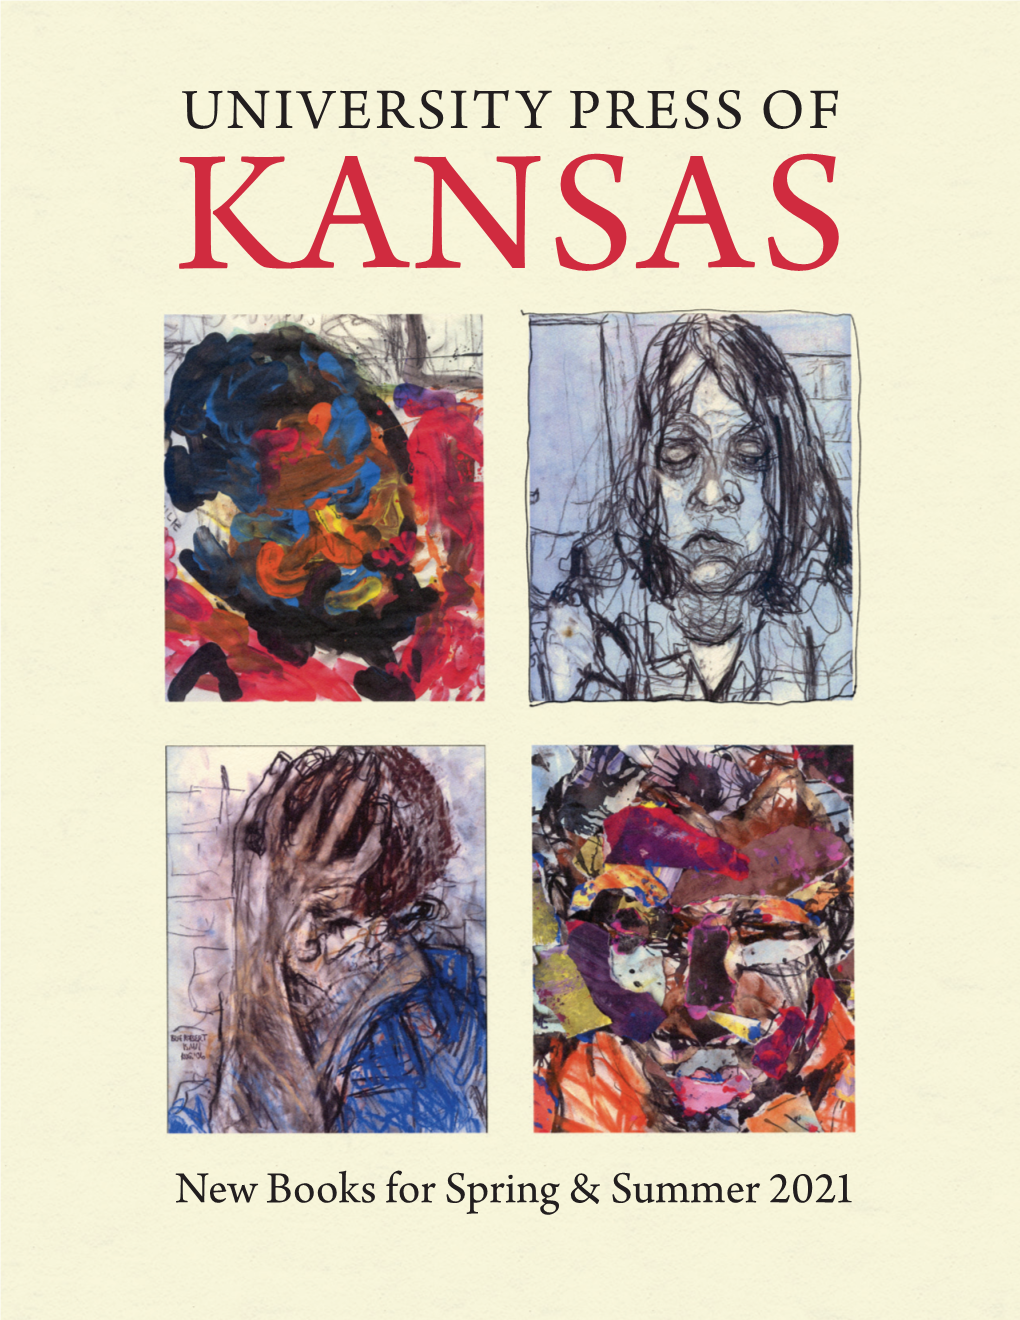 University Press of Kansas